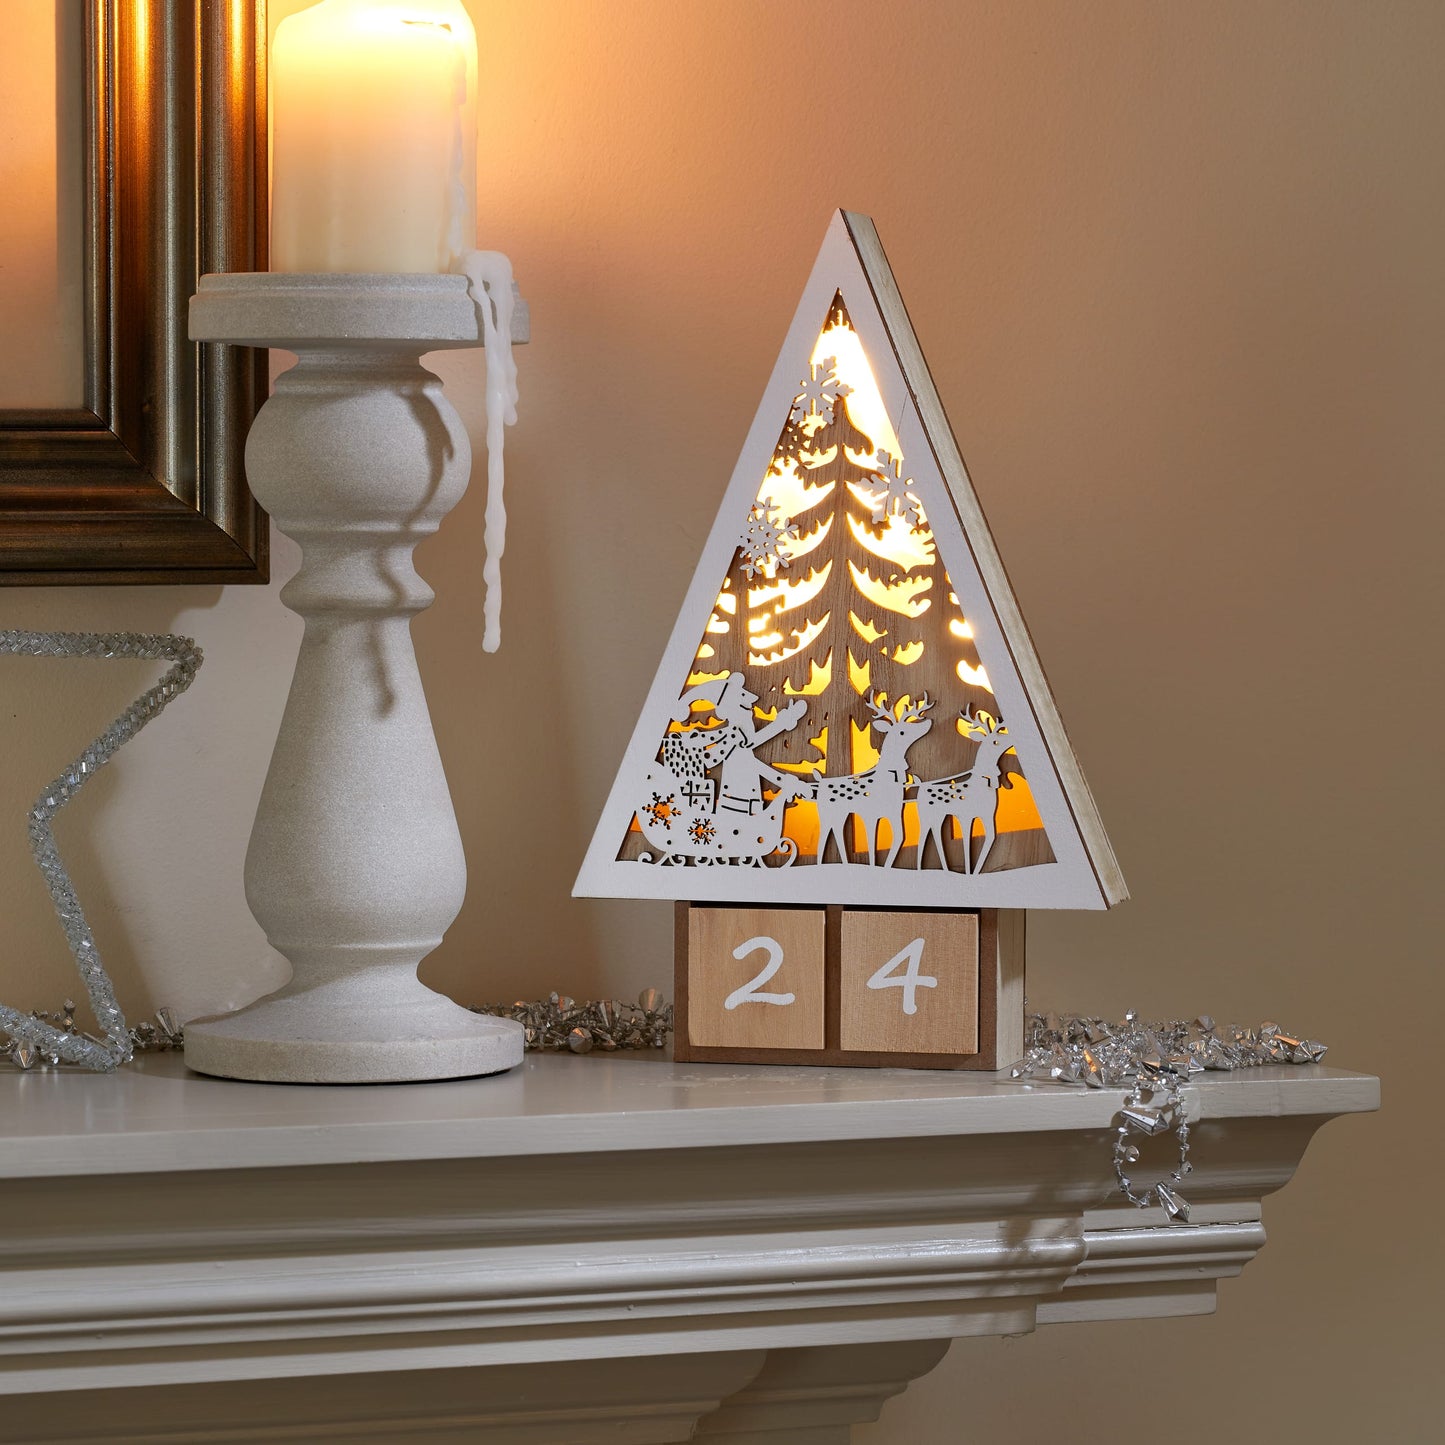 Svietiaca dekorácia s odpočtom dní do Vianoc ⸱ InLit Wonderland Countdown!